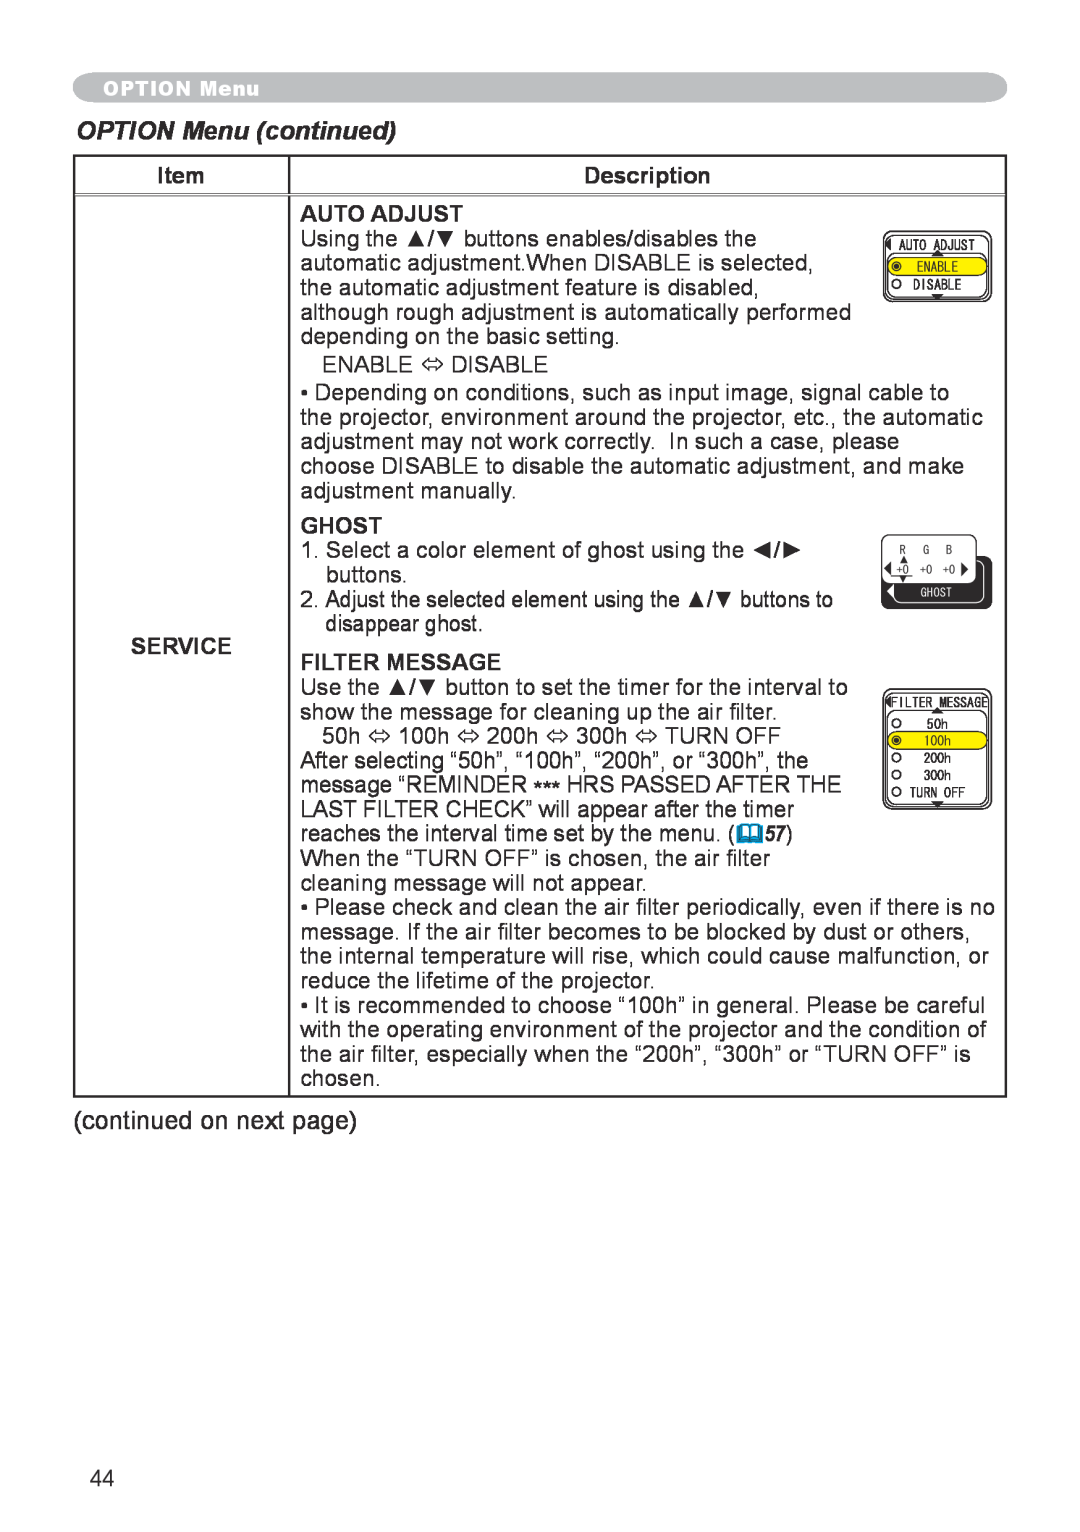 Hitachi CP-X600 user manual OPTION Menu continued, Description, Auto Adjust, Ghost, Service, Filter Message 